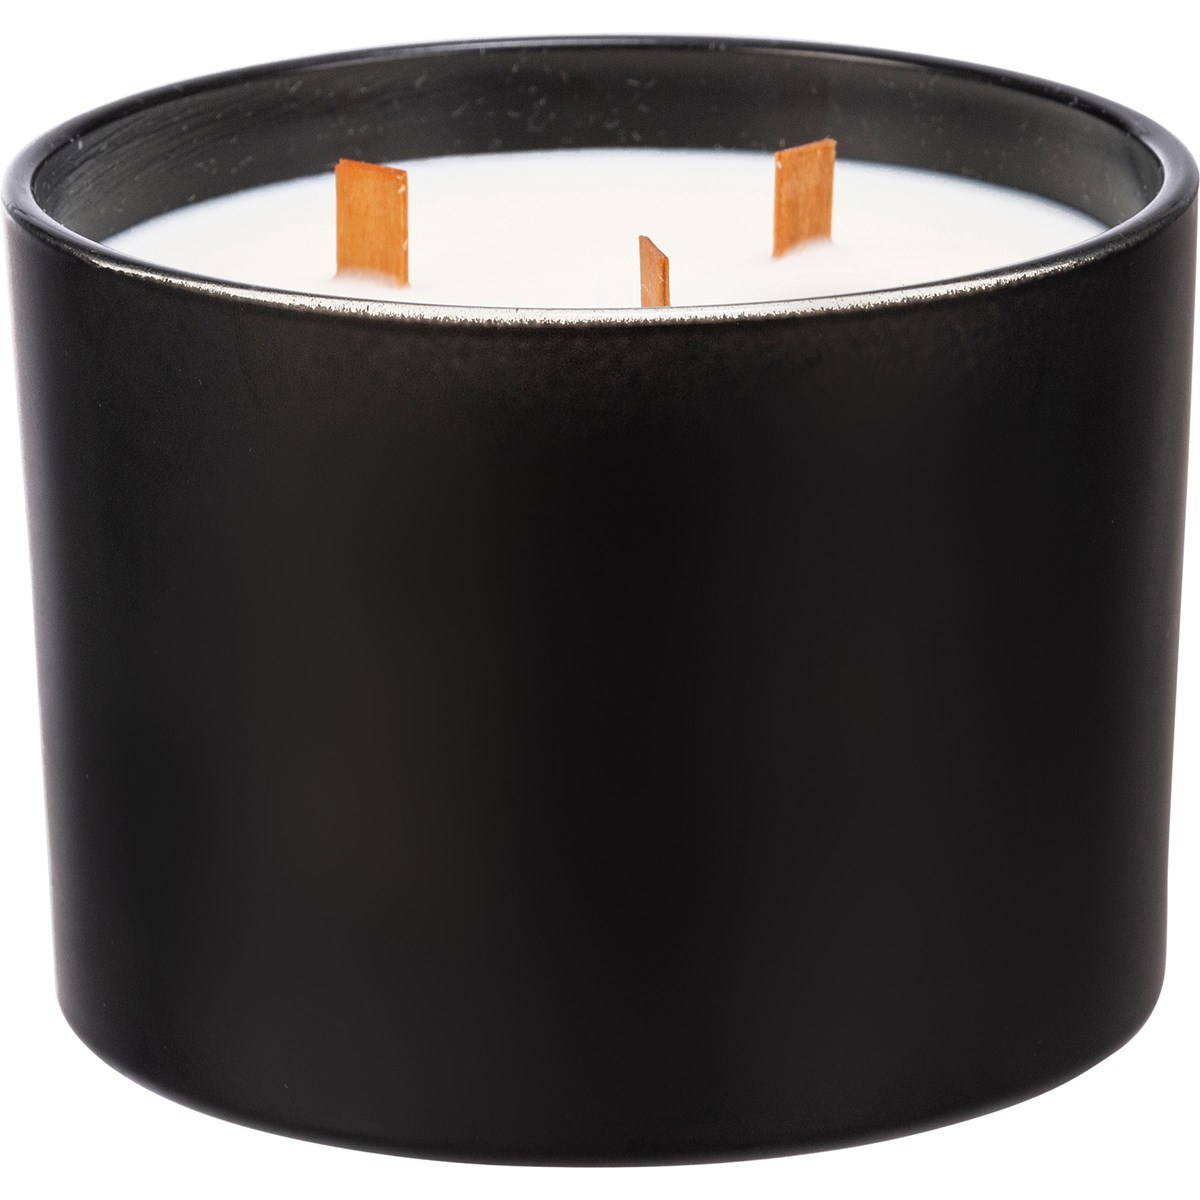 Gratitude Jar Candle - Soy Wax, Glass, Wood